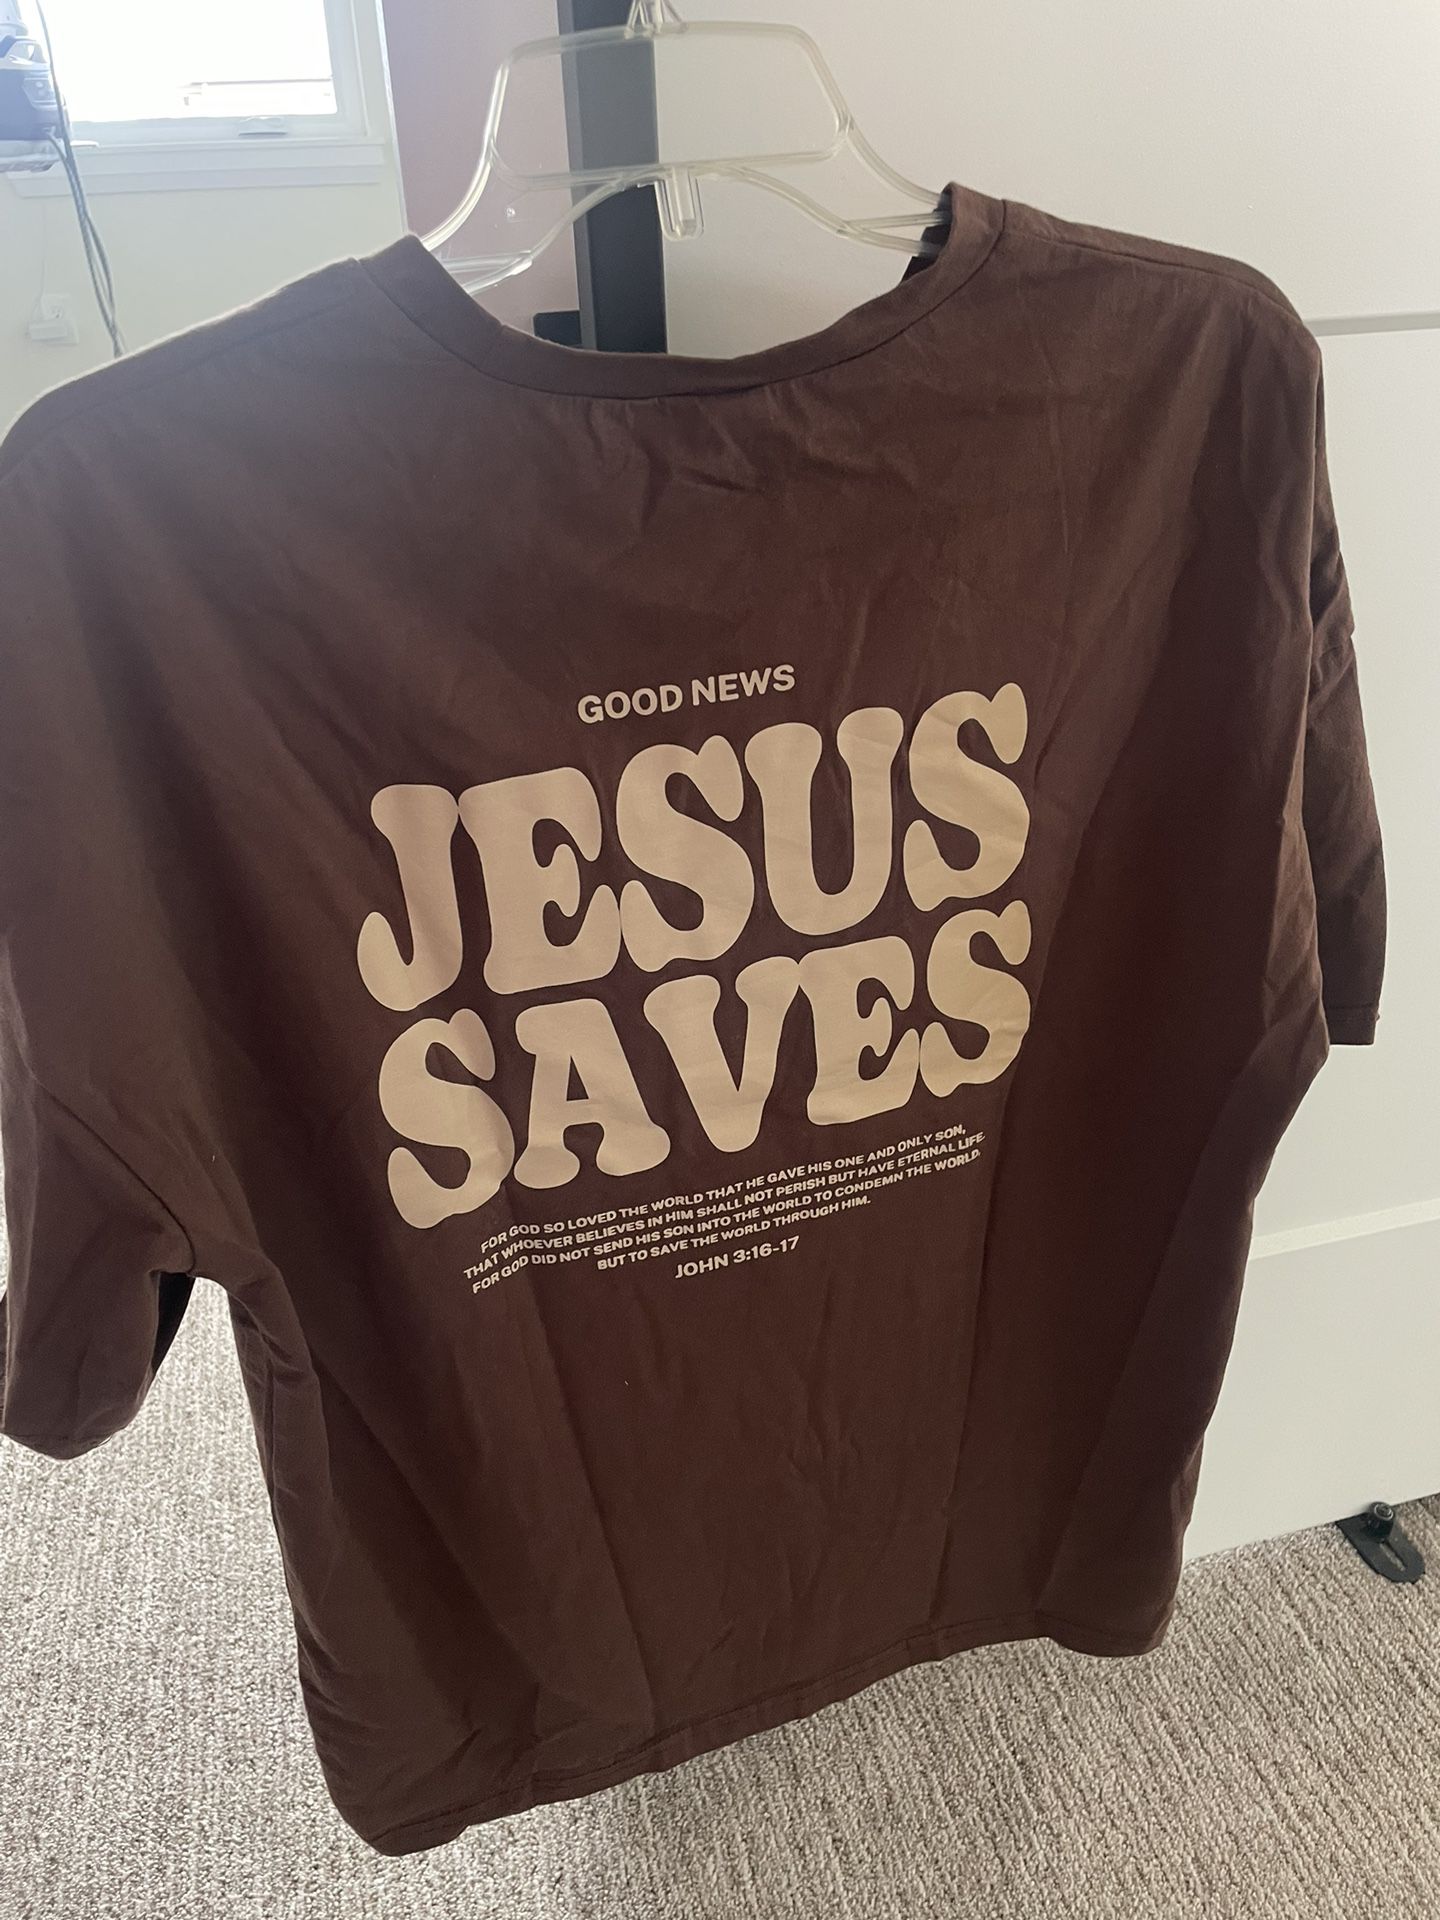 Jesus saves shirt 